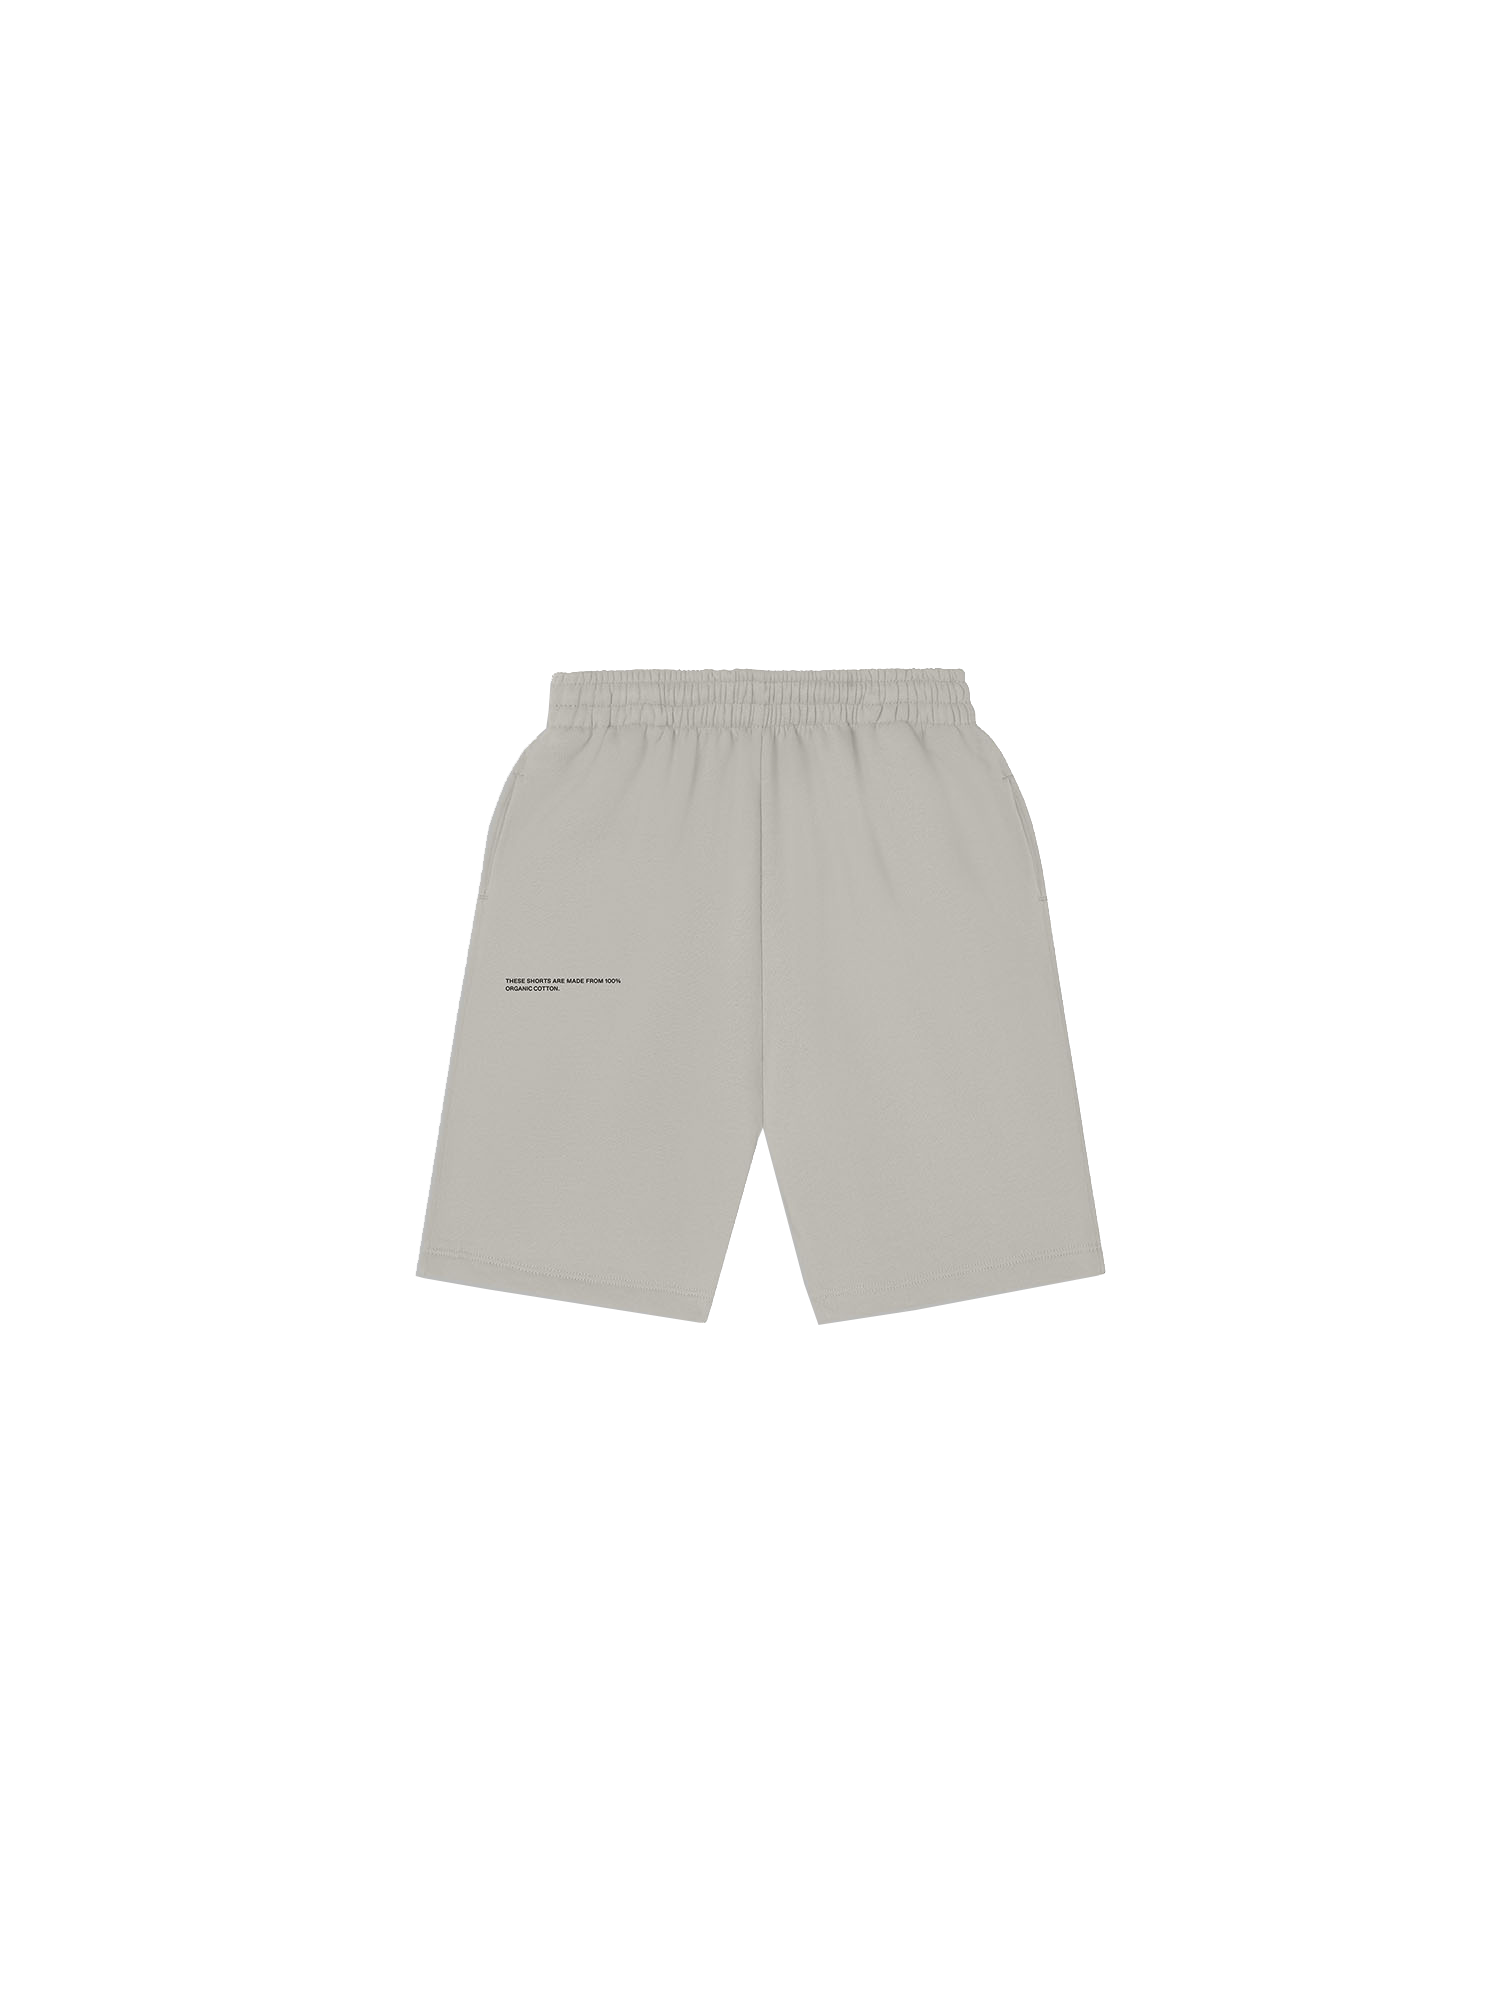 Kids 365 Long Shorts Core—stone packshot-3